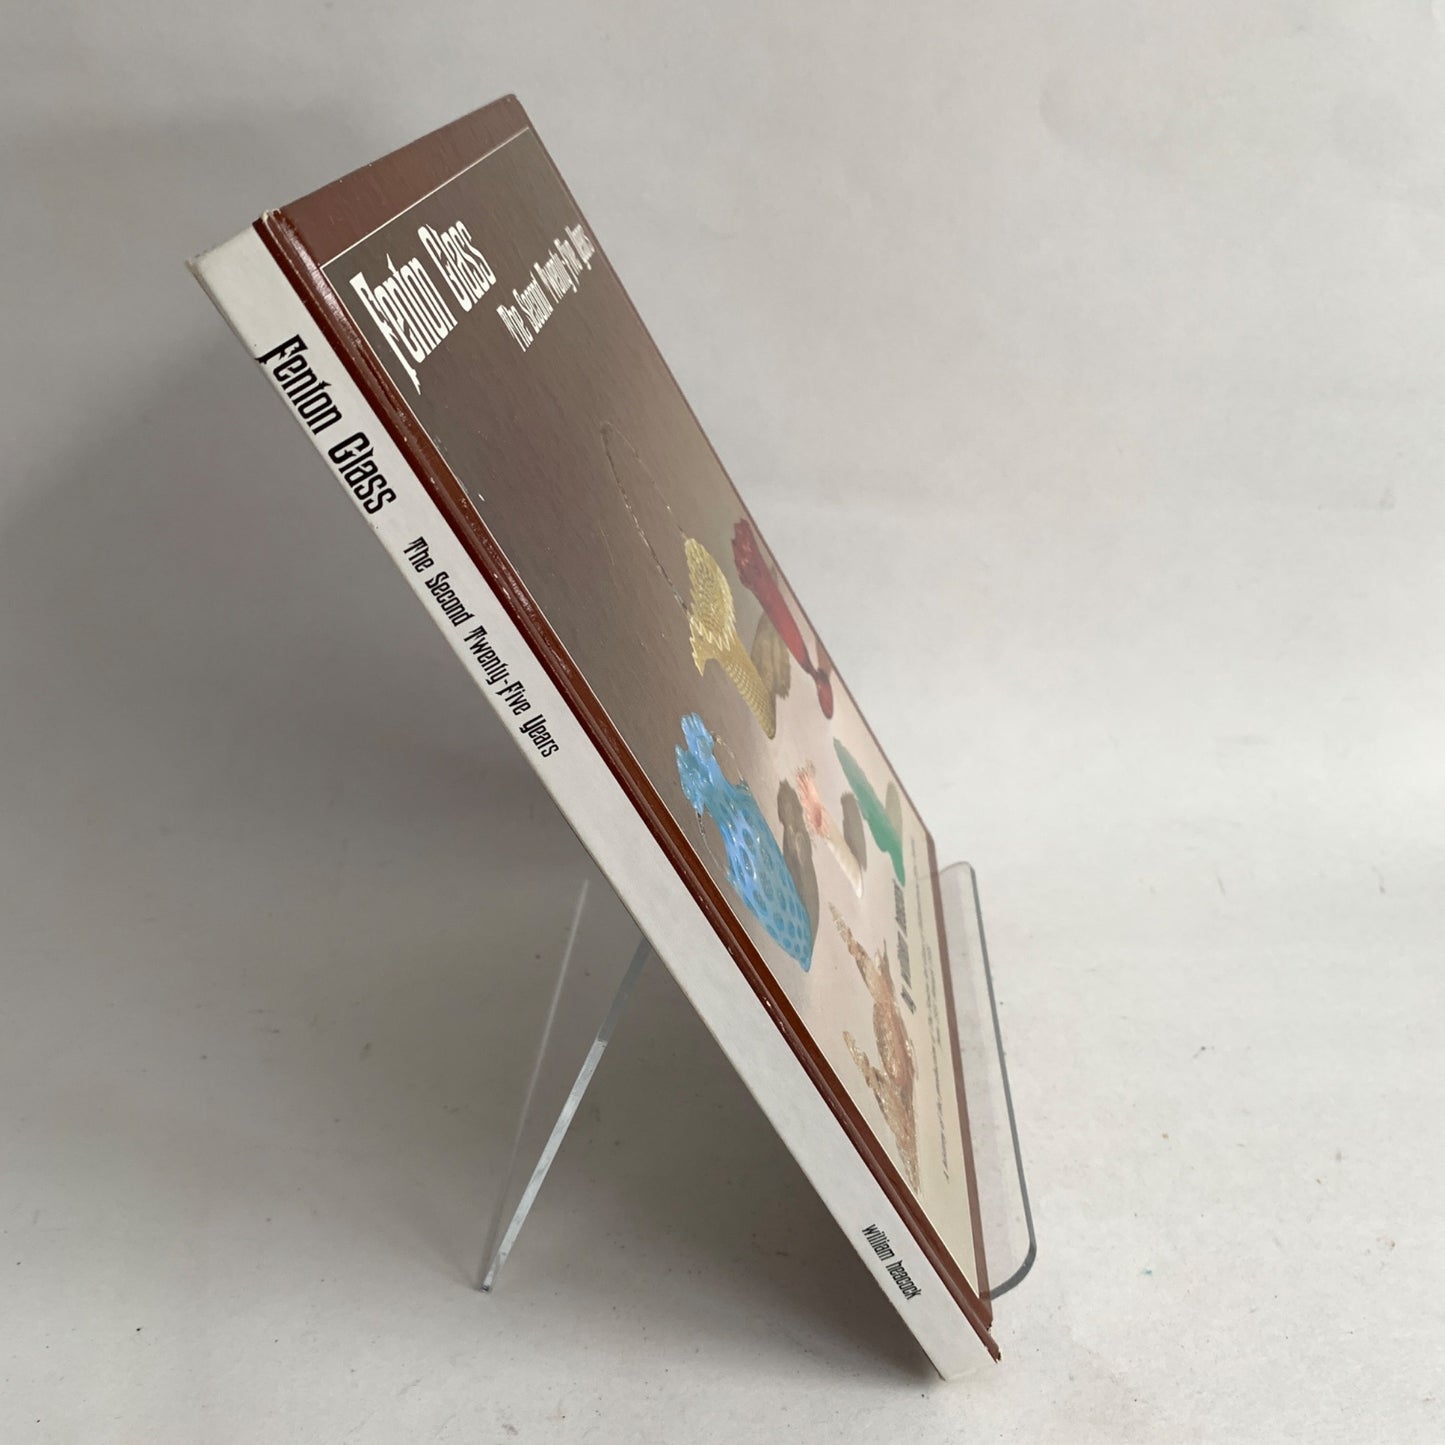 Fenton Glass The Second Twenty-Five Years Book Hardcover